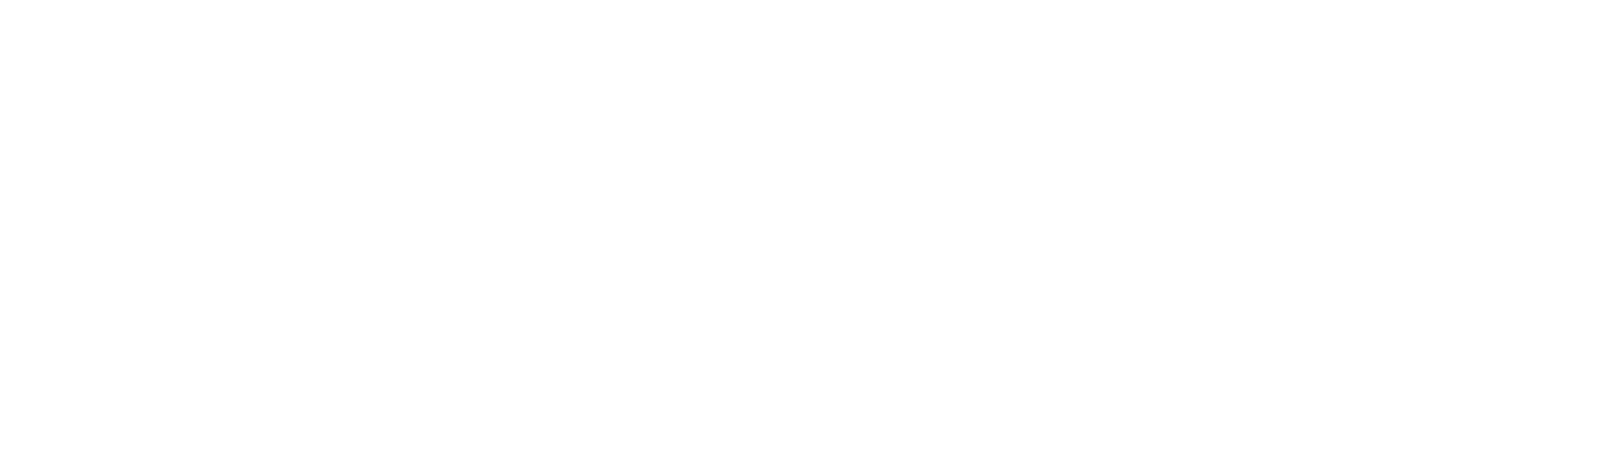 Ebos Group logo large for dark backgrounds (transparent PNG)